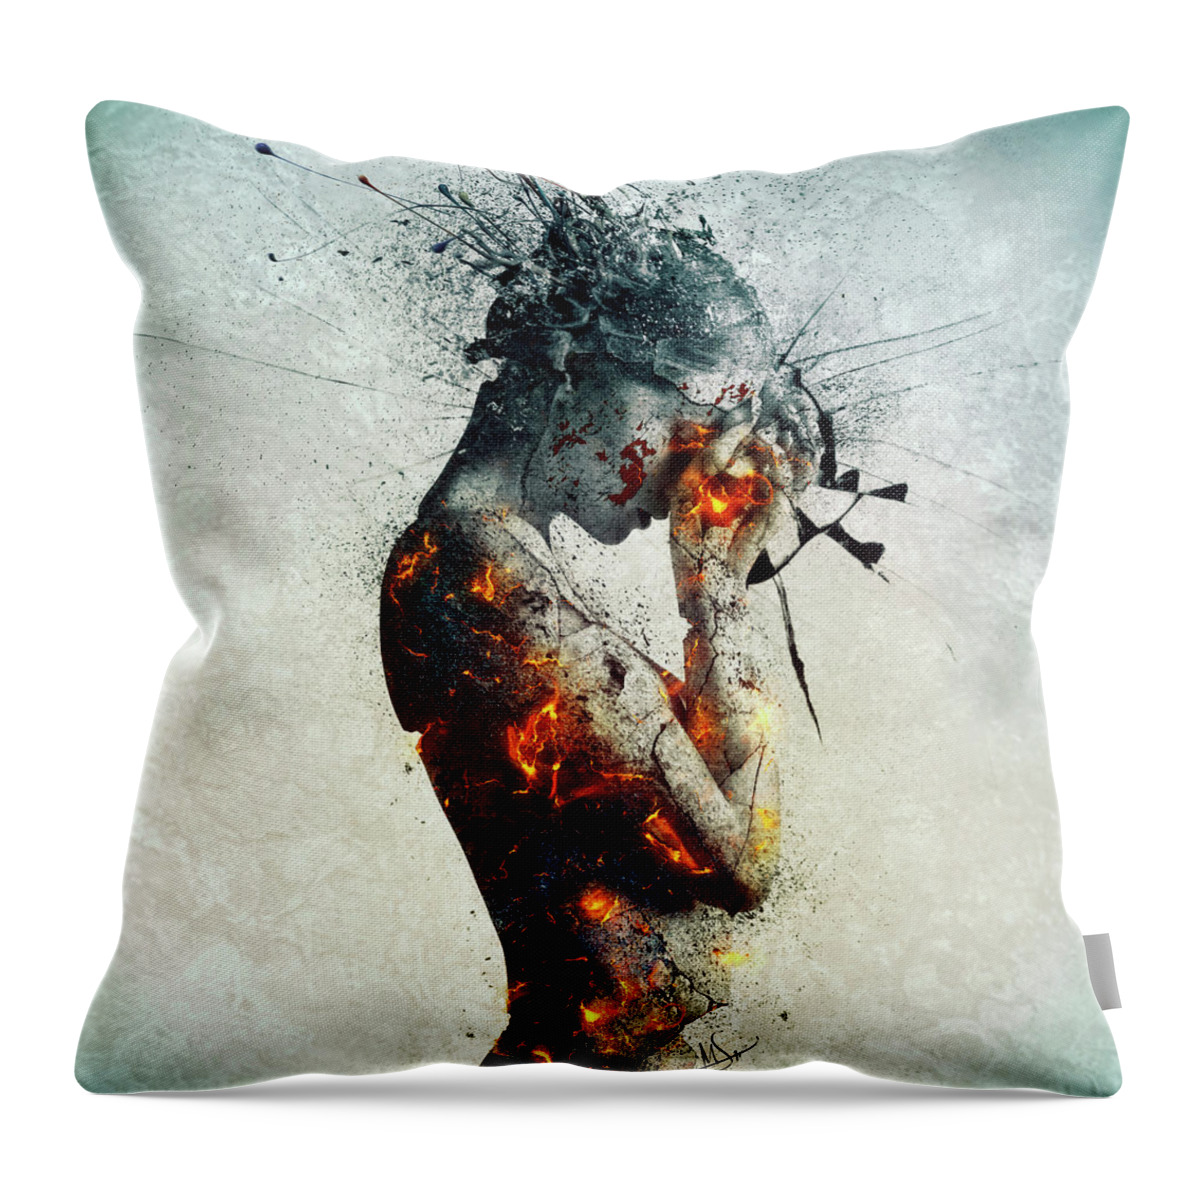 #faatoppicks Throw Pillow featuring the digital art Deliberation by Mario Sanchez Nevado